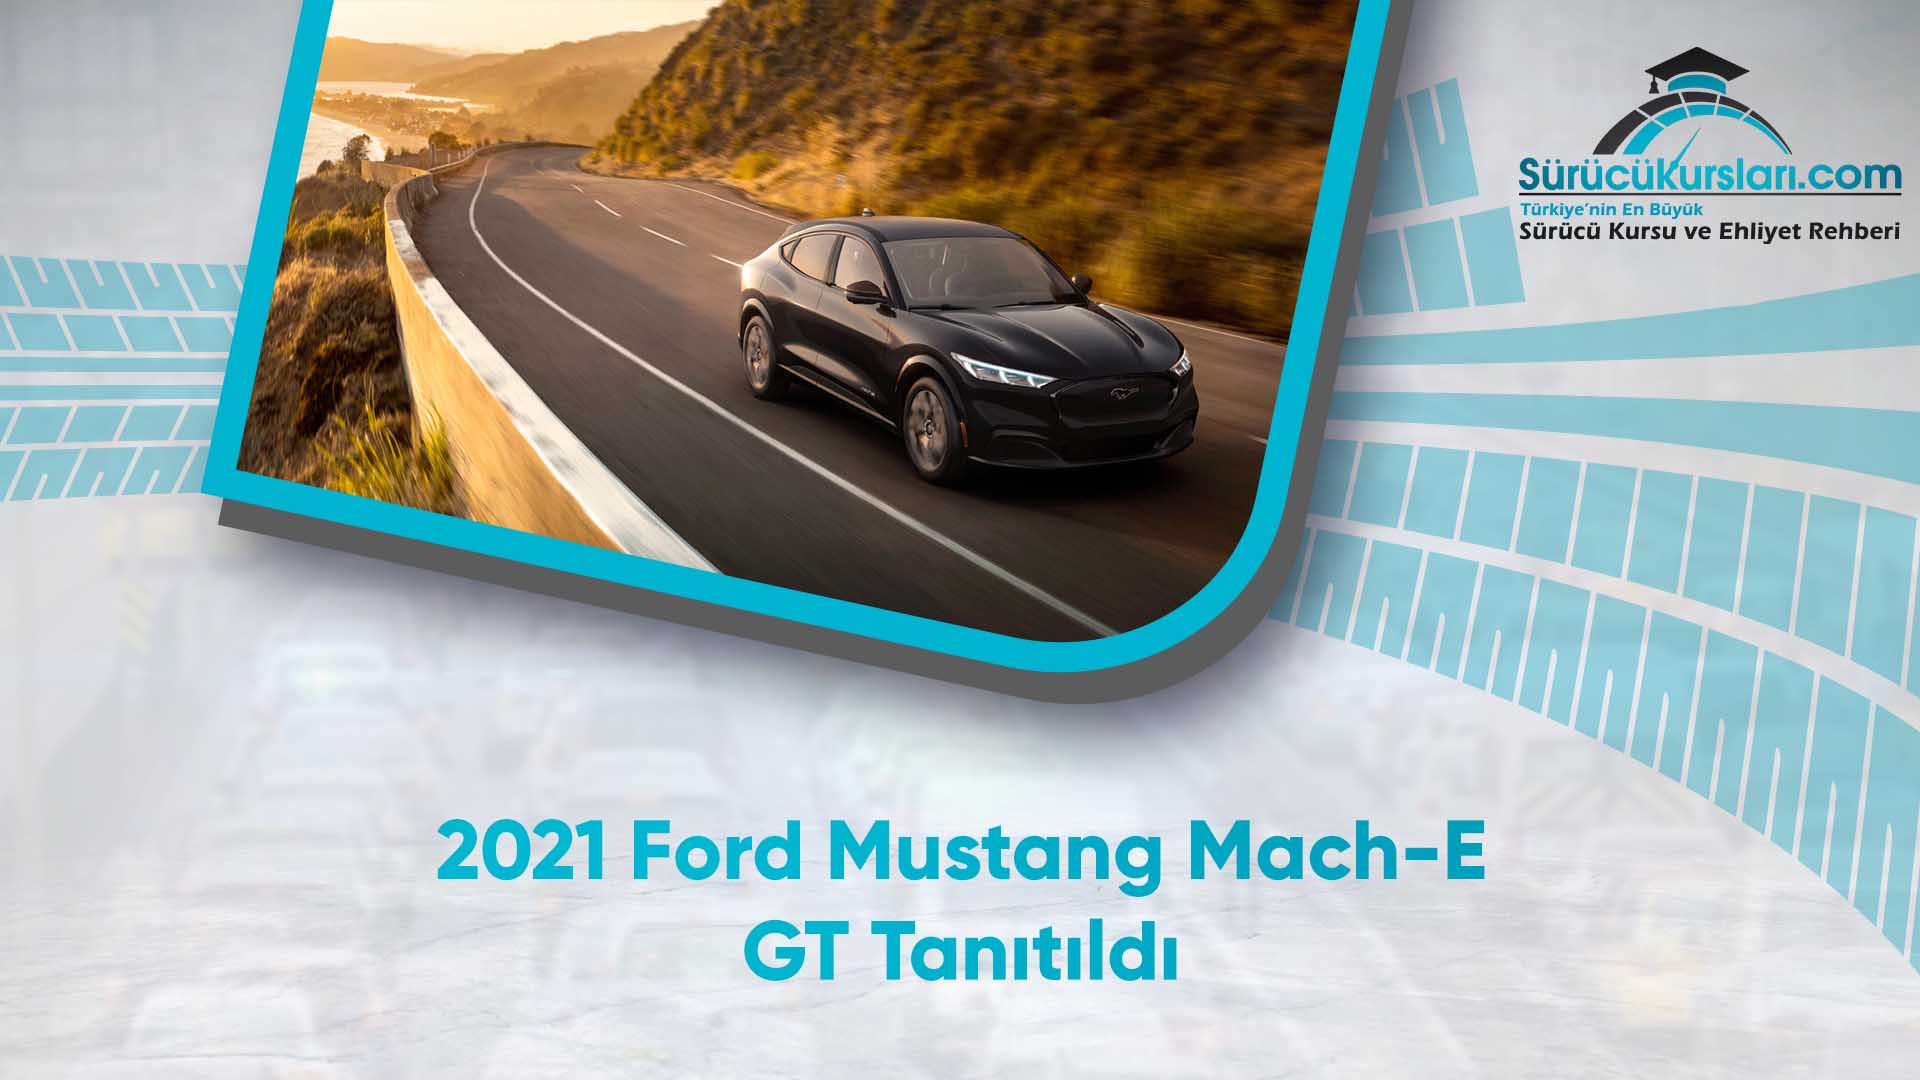 2021 Ford Mustang Mach-E GT Tanıtıldı